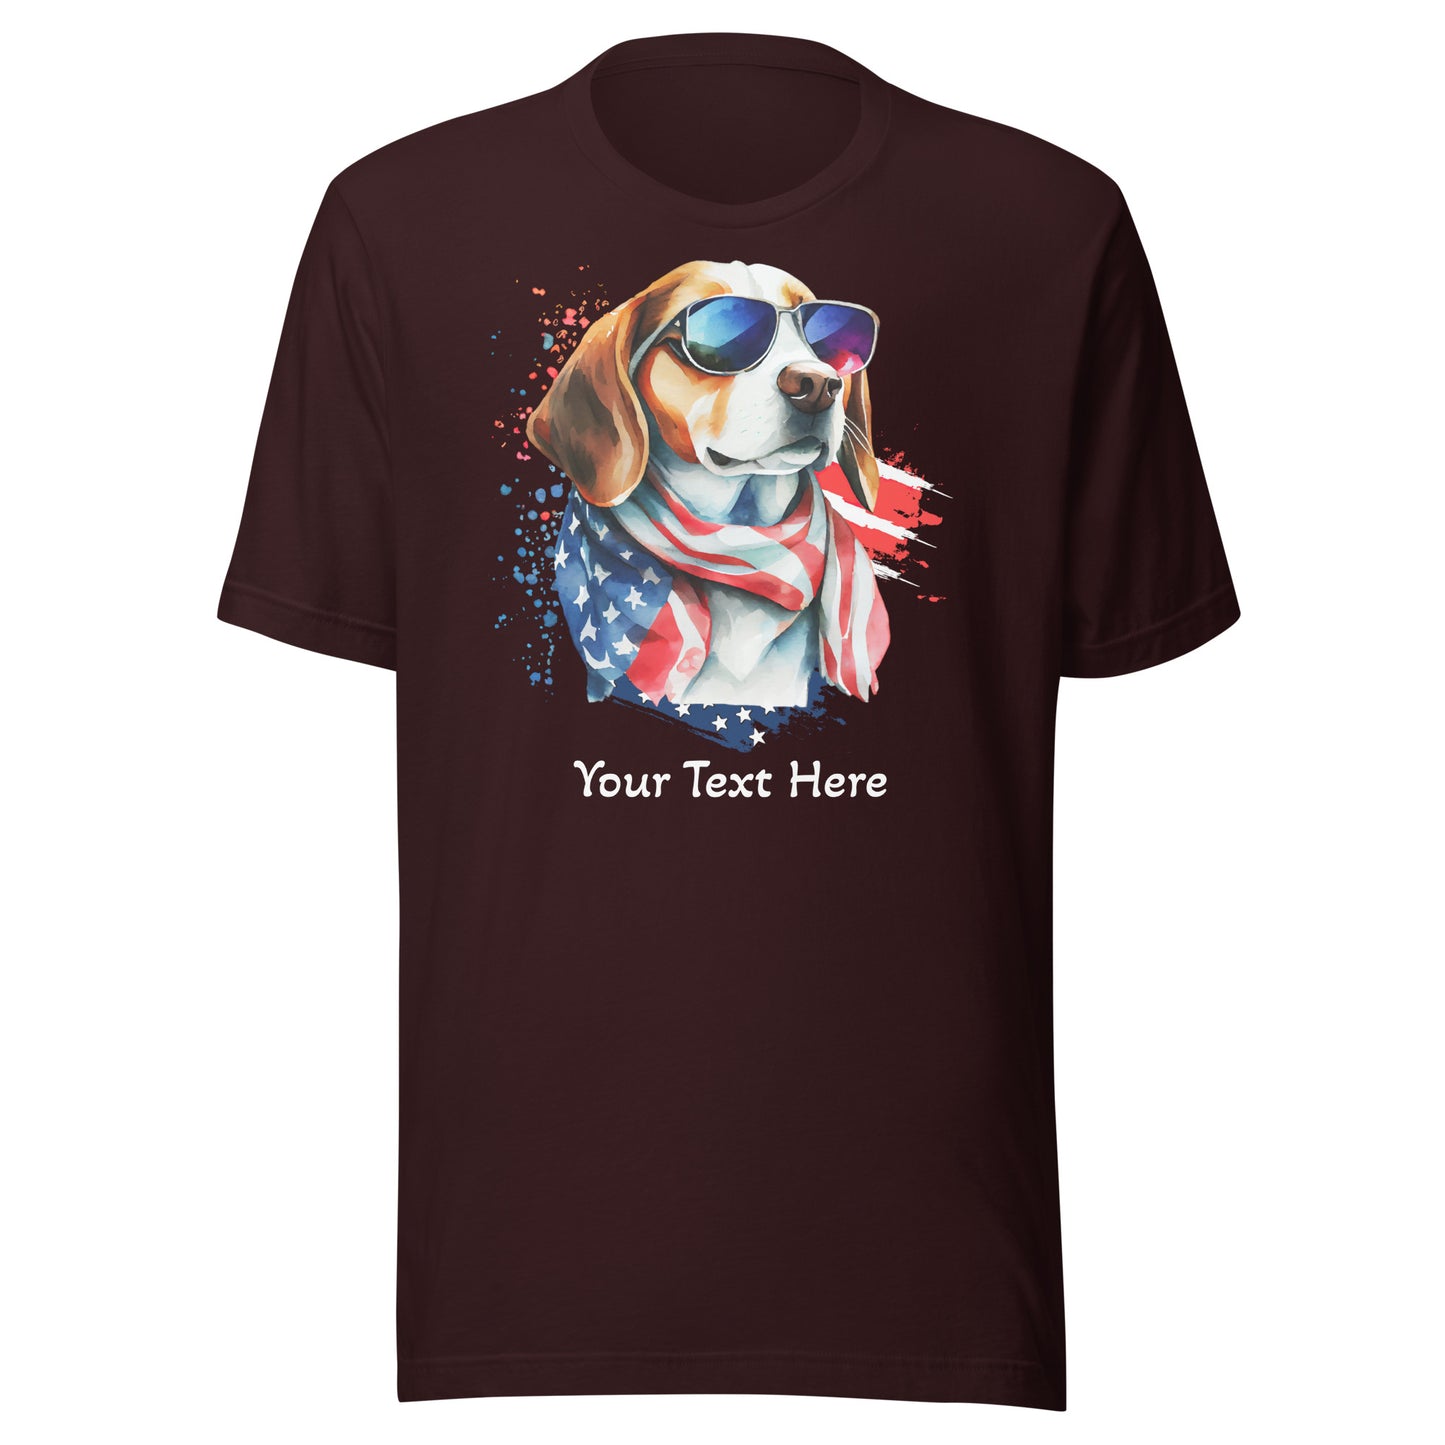 Oxblood Black Customizable Tshirt With Patriotic Dog